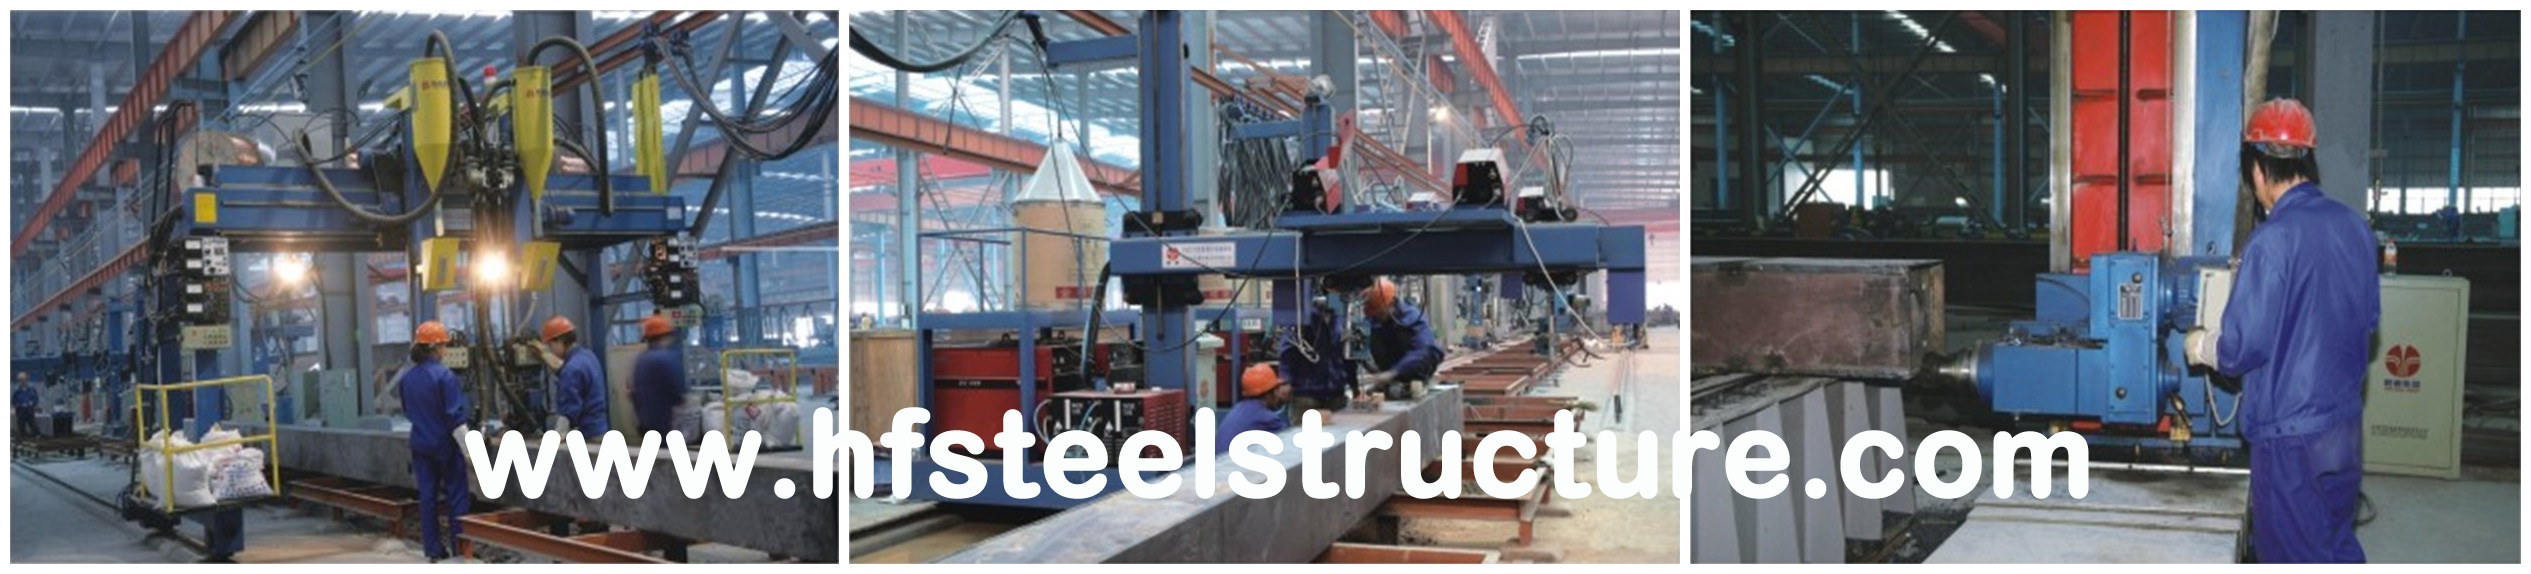 Modern Heavy Industrial Commercial Steel Buildings Natatorium in Gymnasium